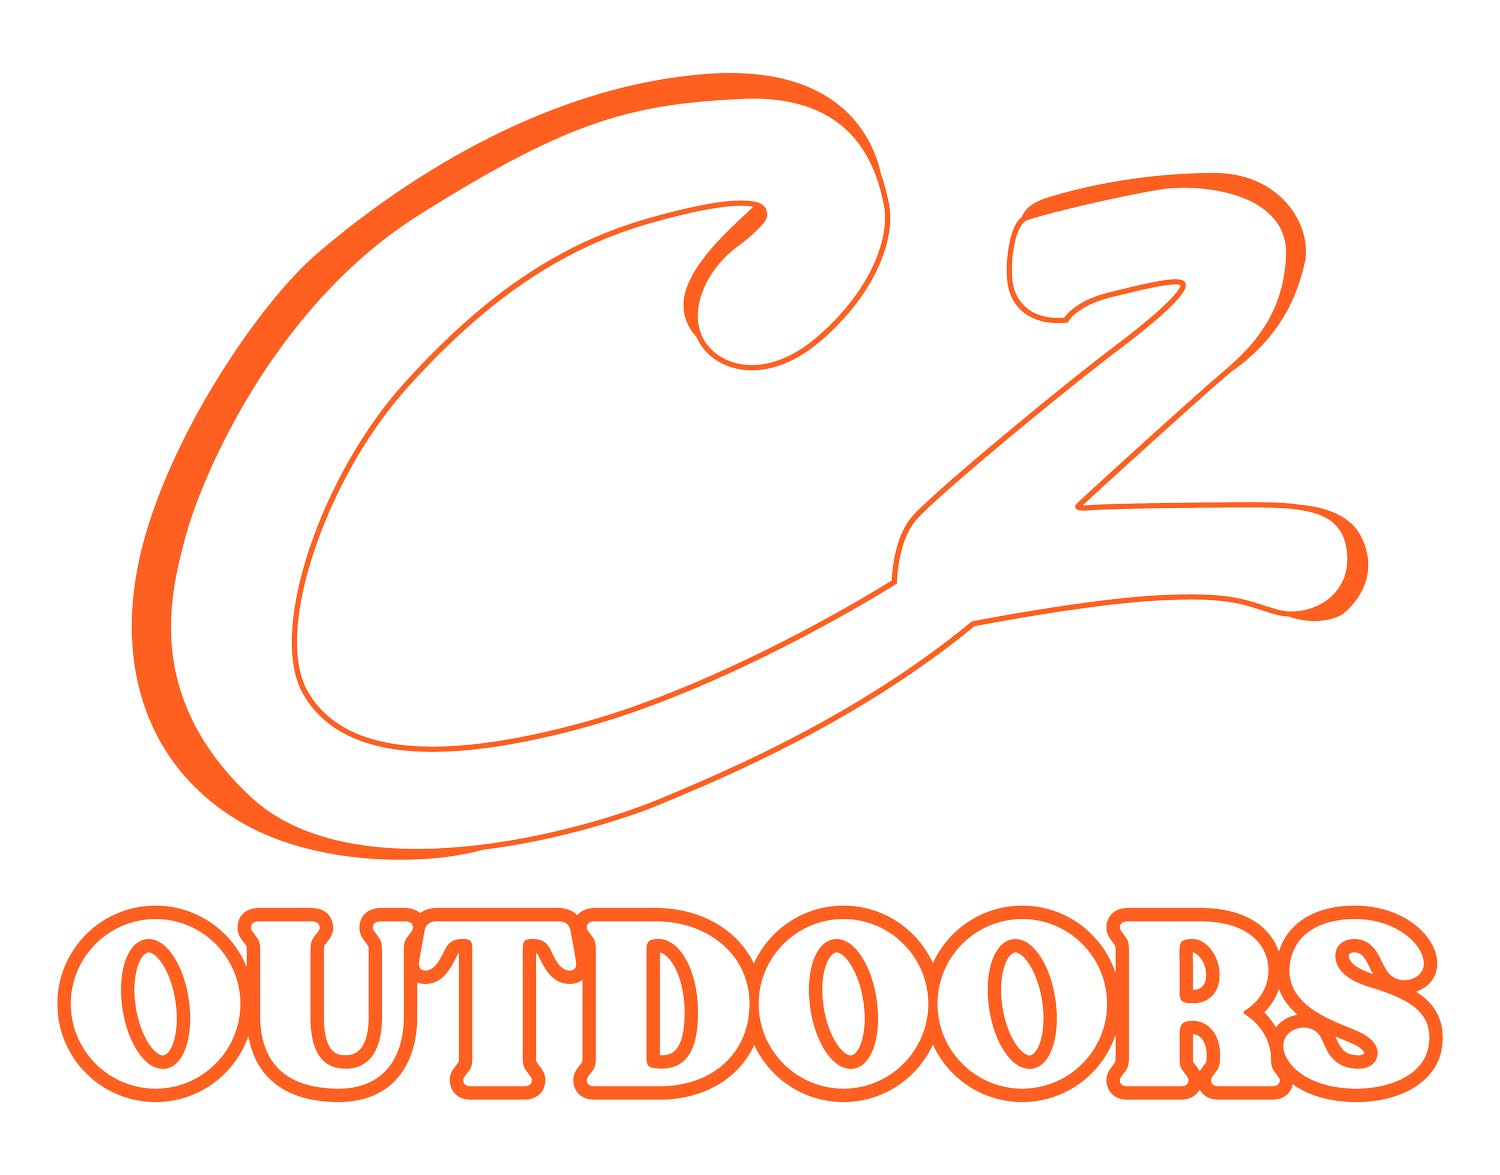 C2 Outdoors